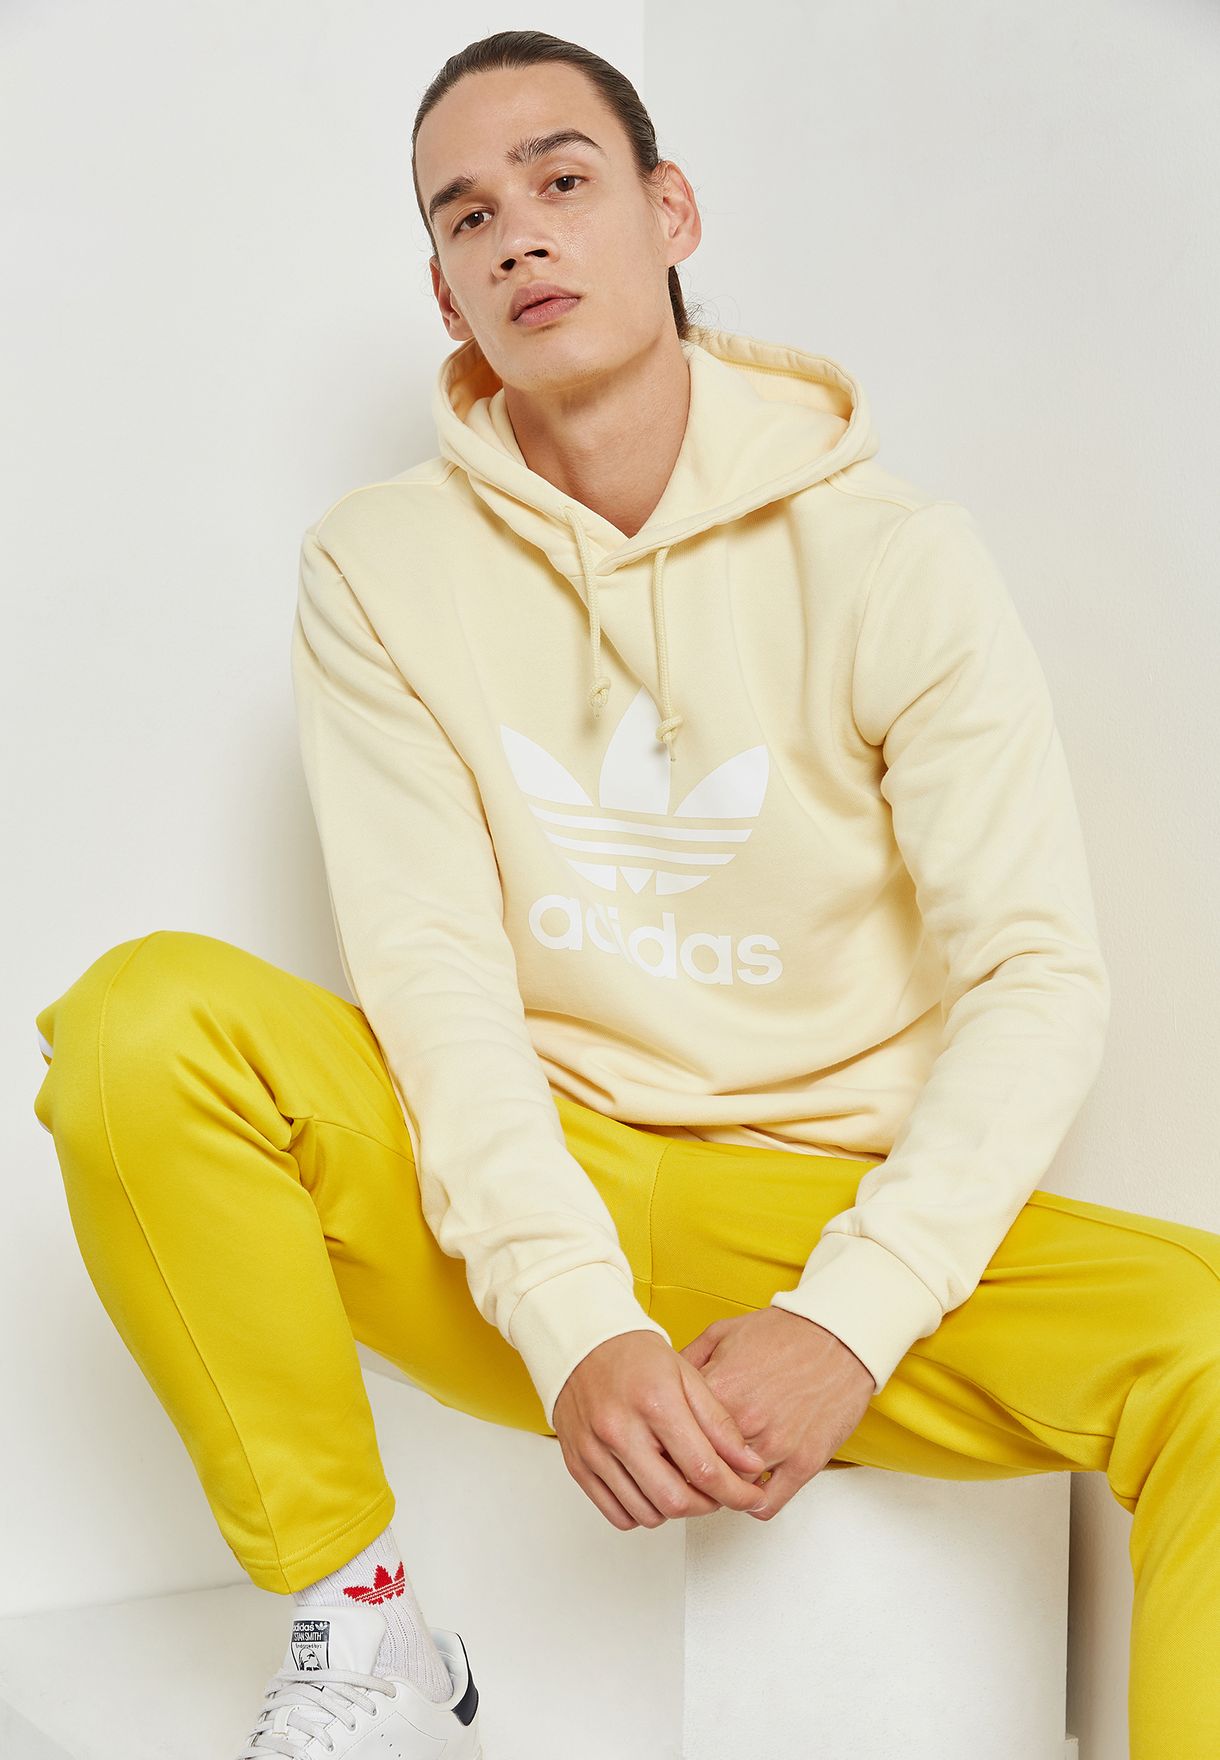 adidas originals yellow hoodie